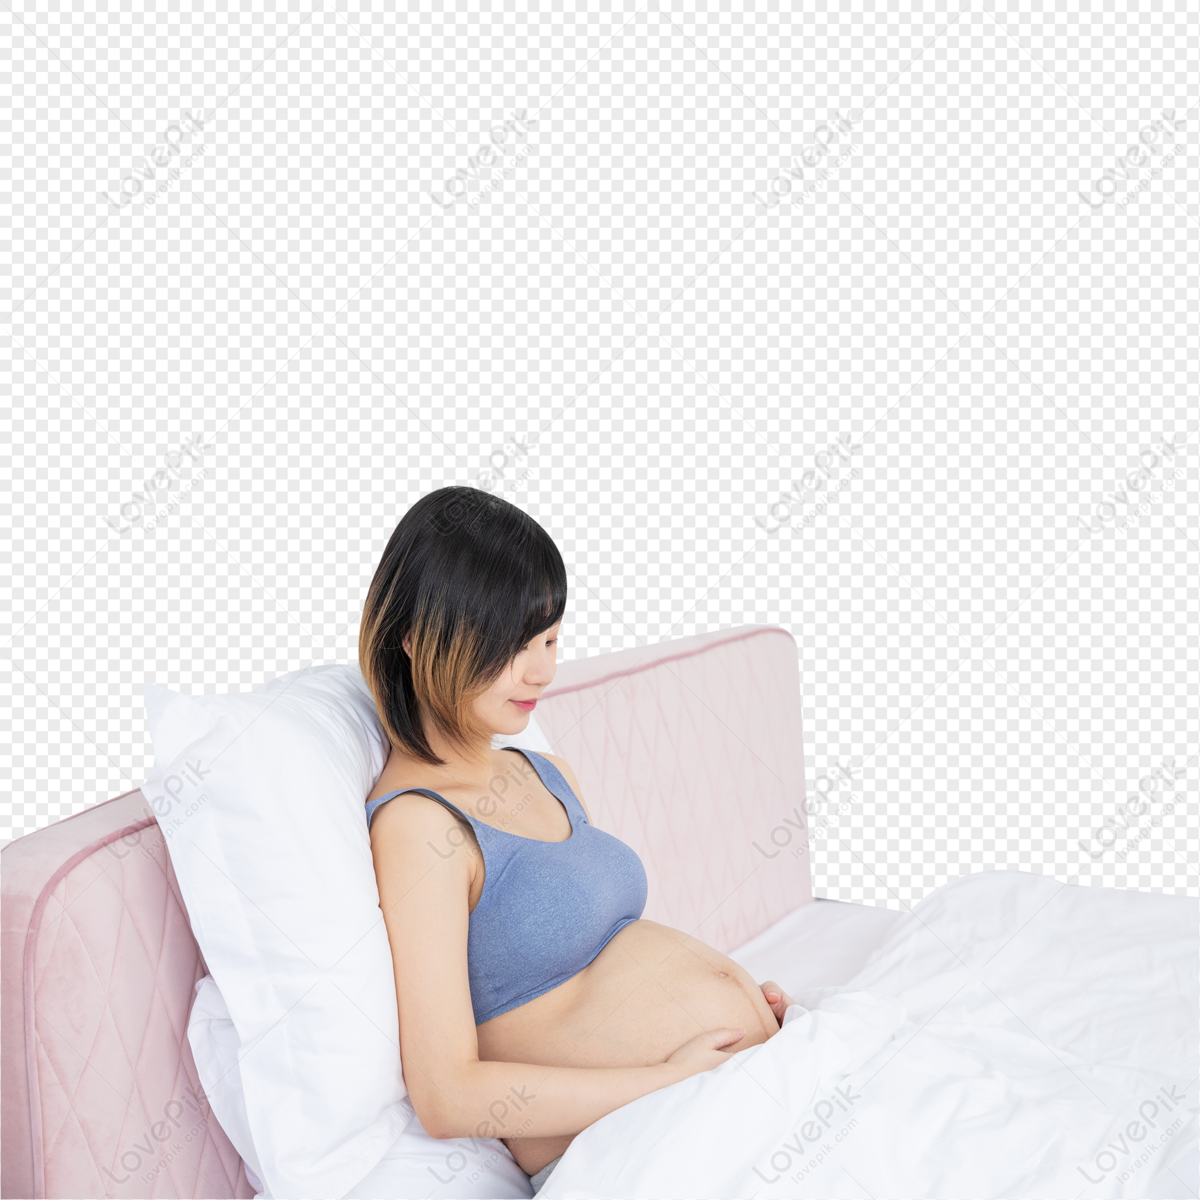 чем опасен оргазм при беременности во сне фото 82